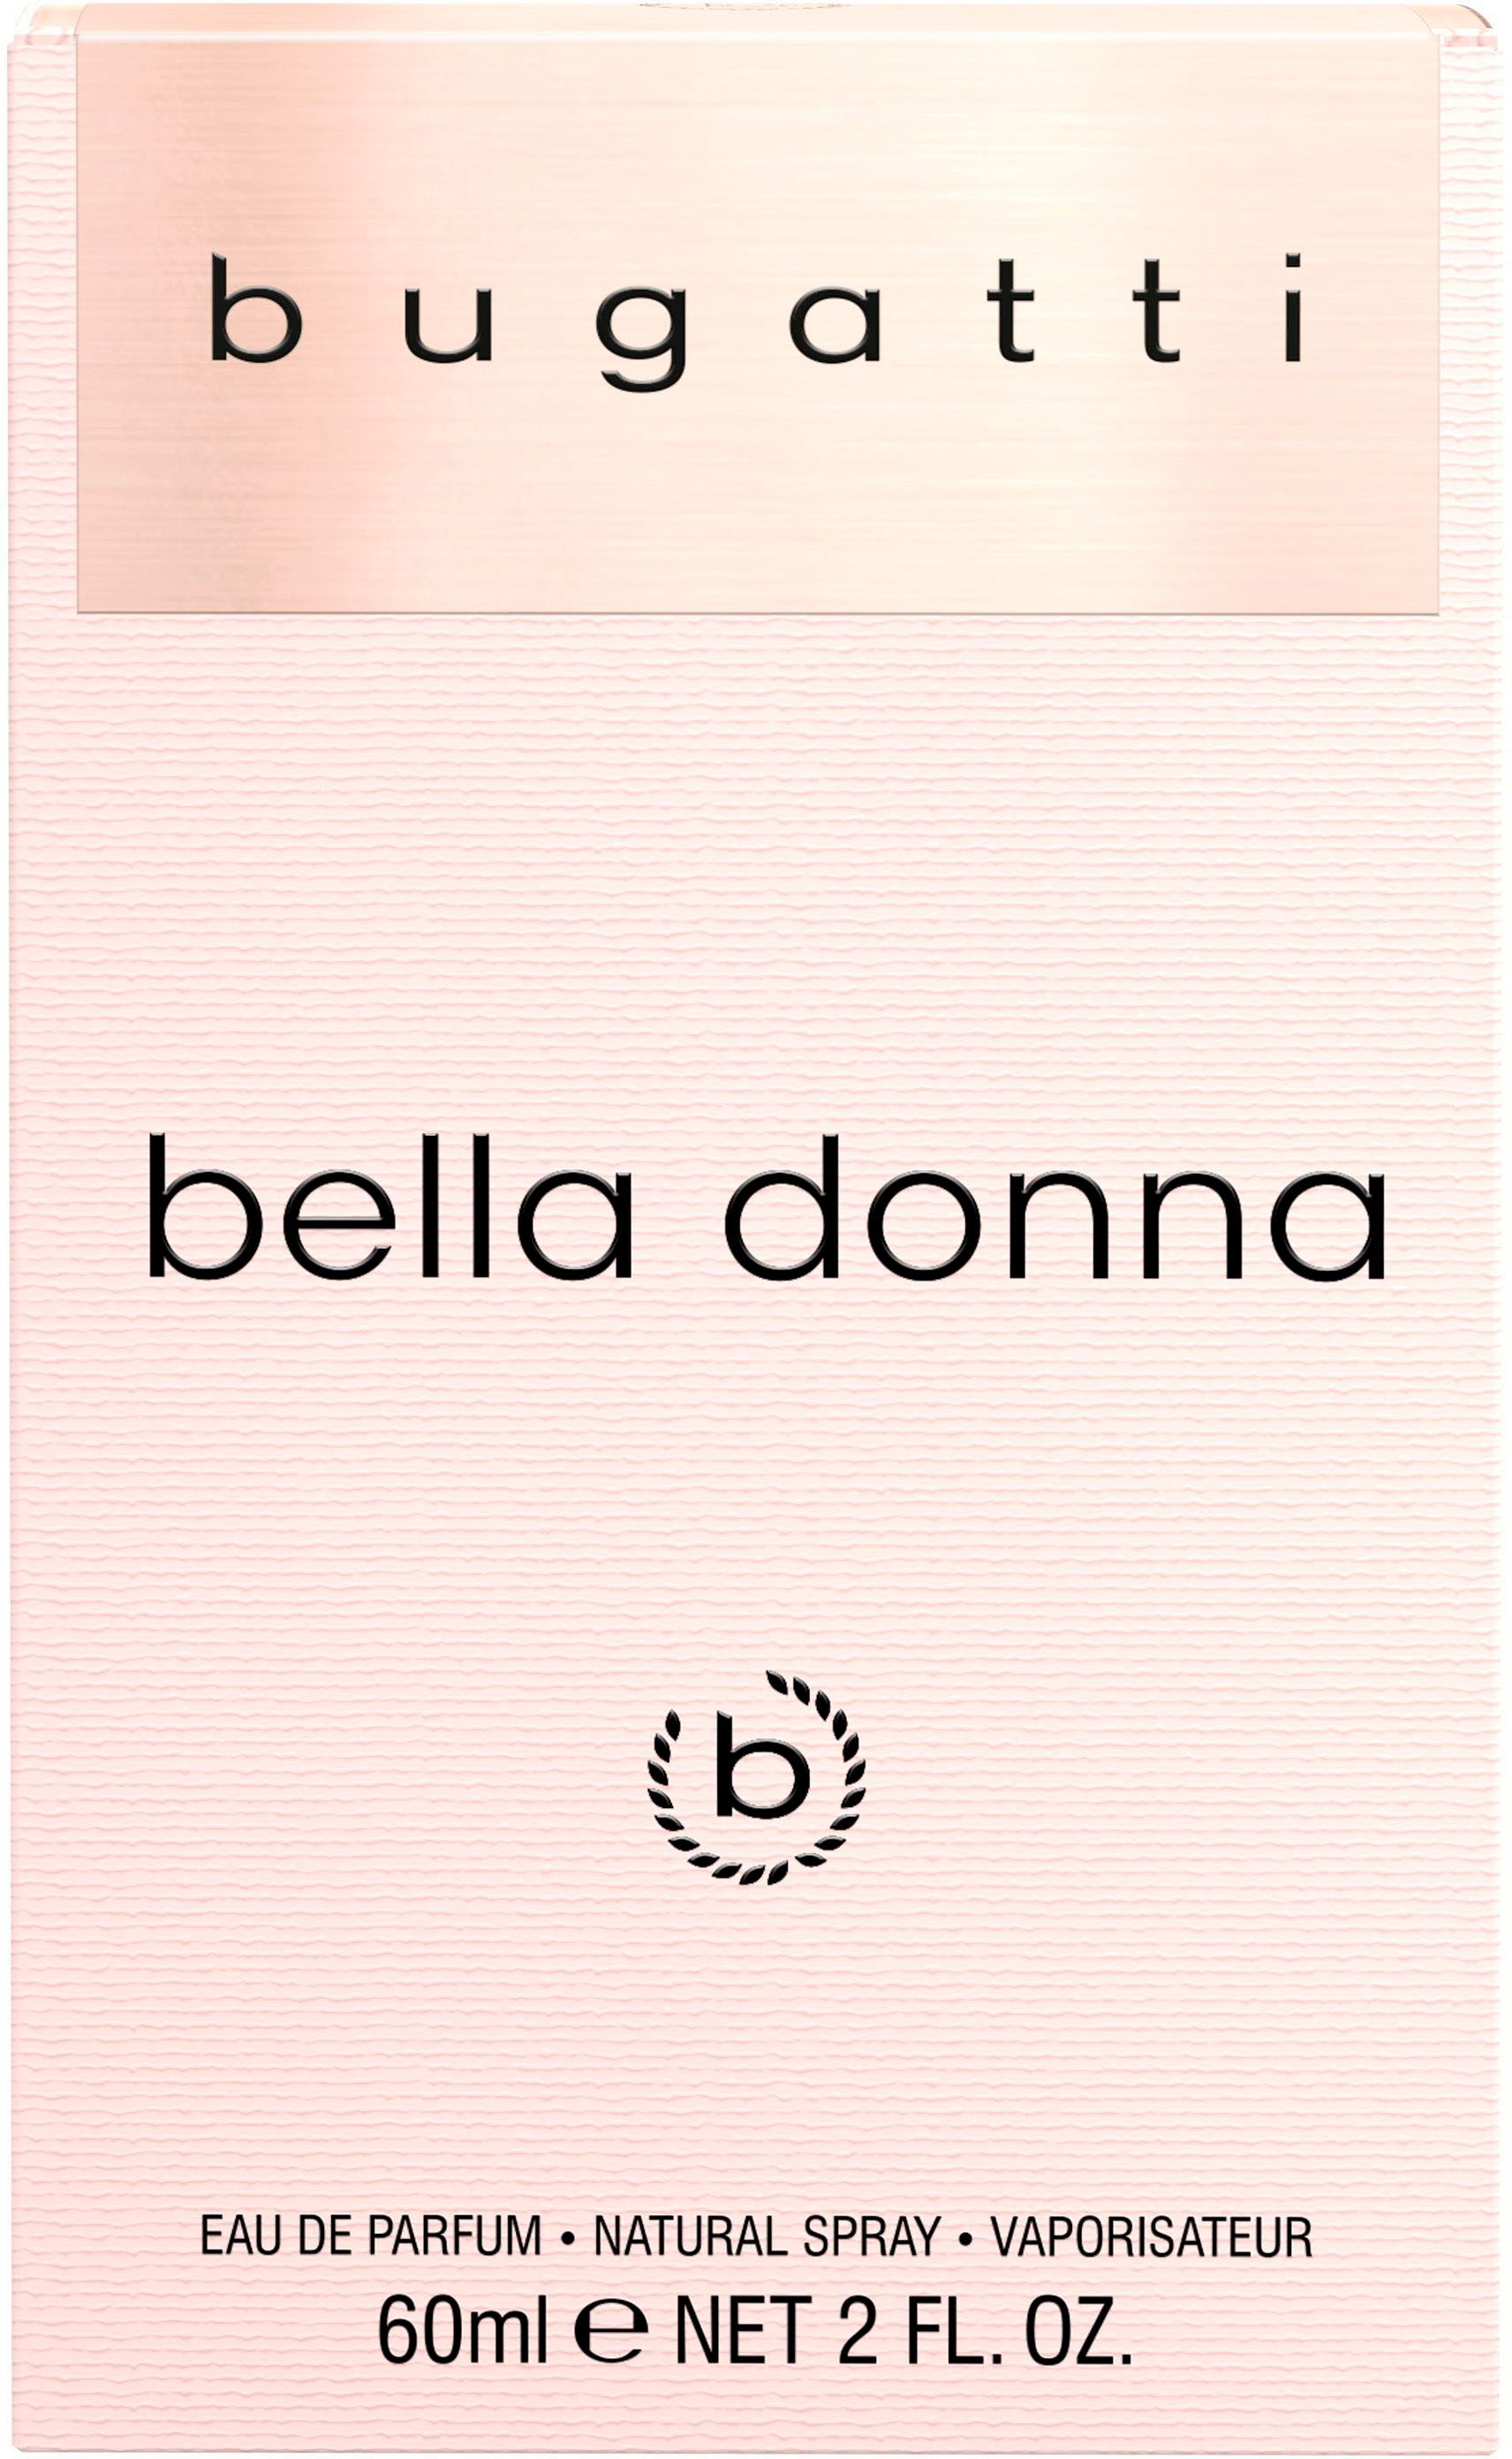 bugatti ml 60 de EdP Bella Donna Eau Parfum